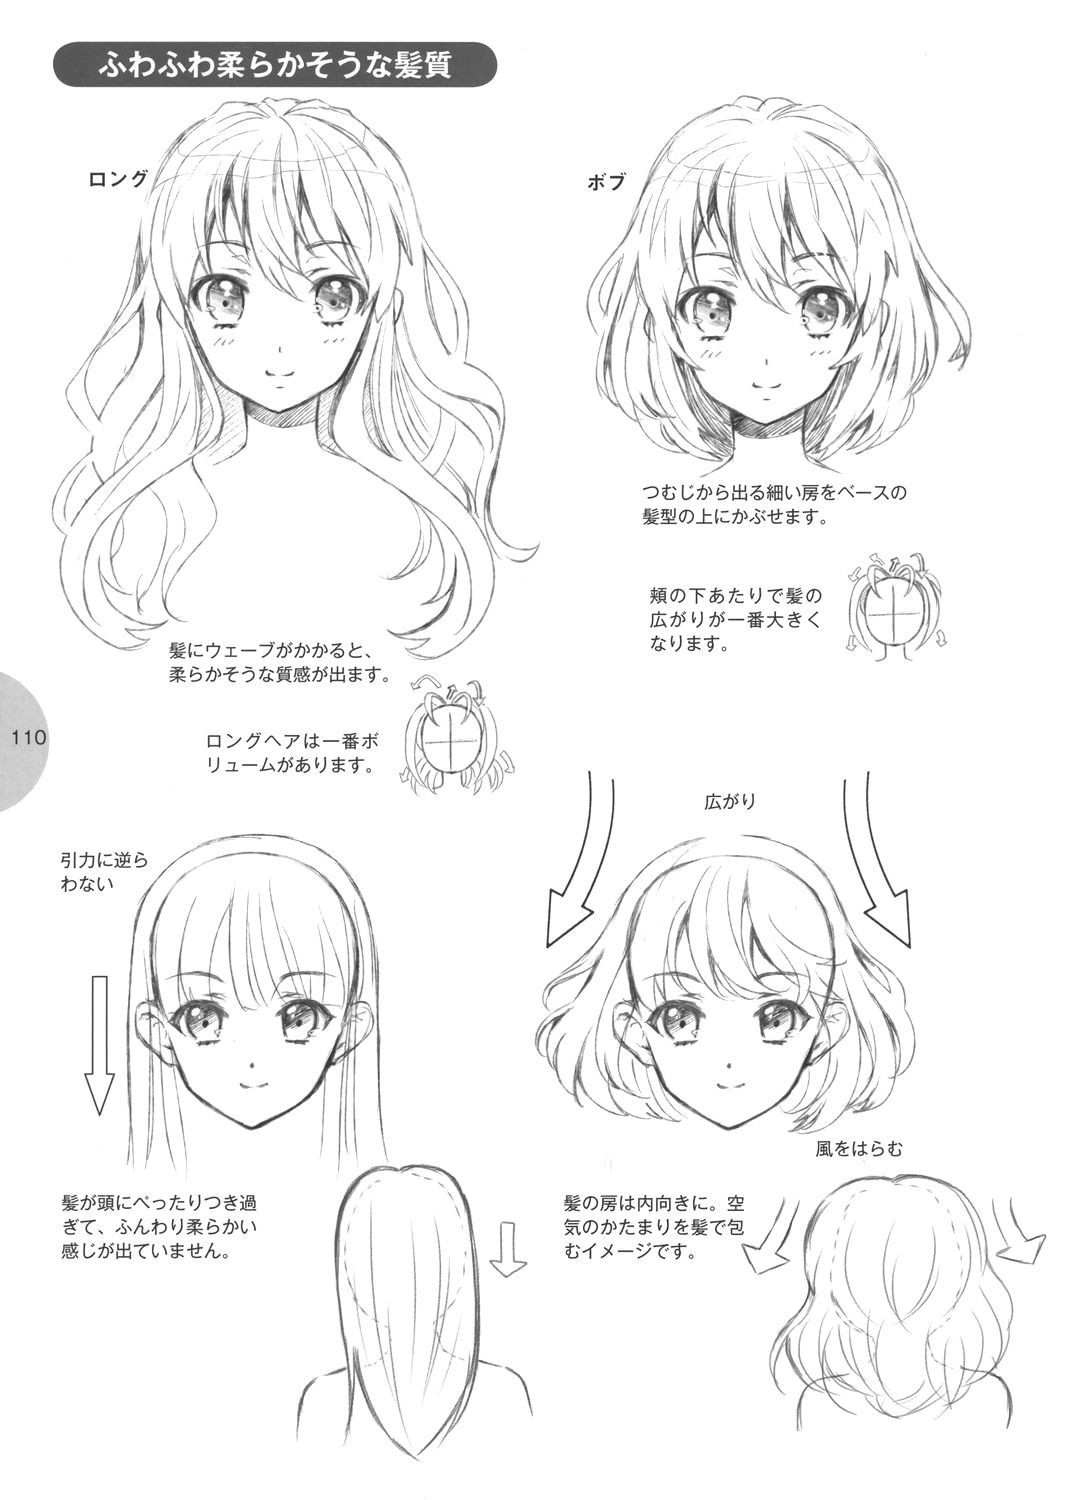 Drawing Anime Hair Tutorial Tutorial Hair Artsy Inpirations Pinterest Drawings Manga